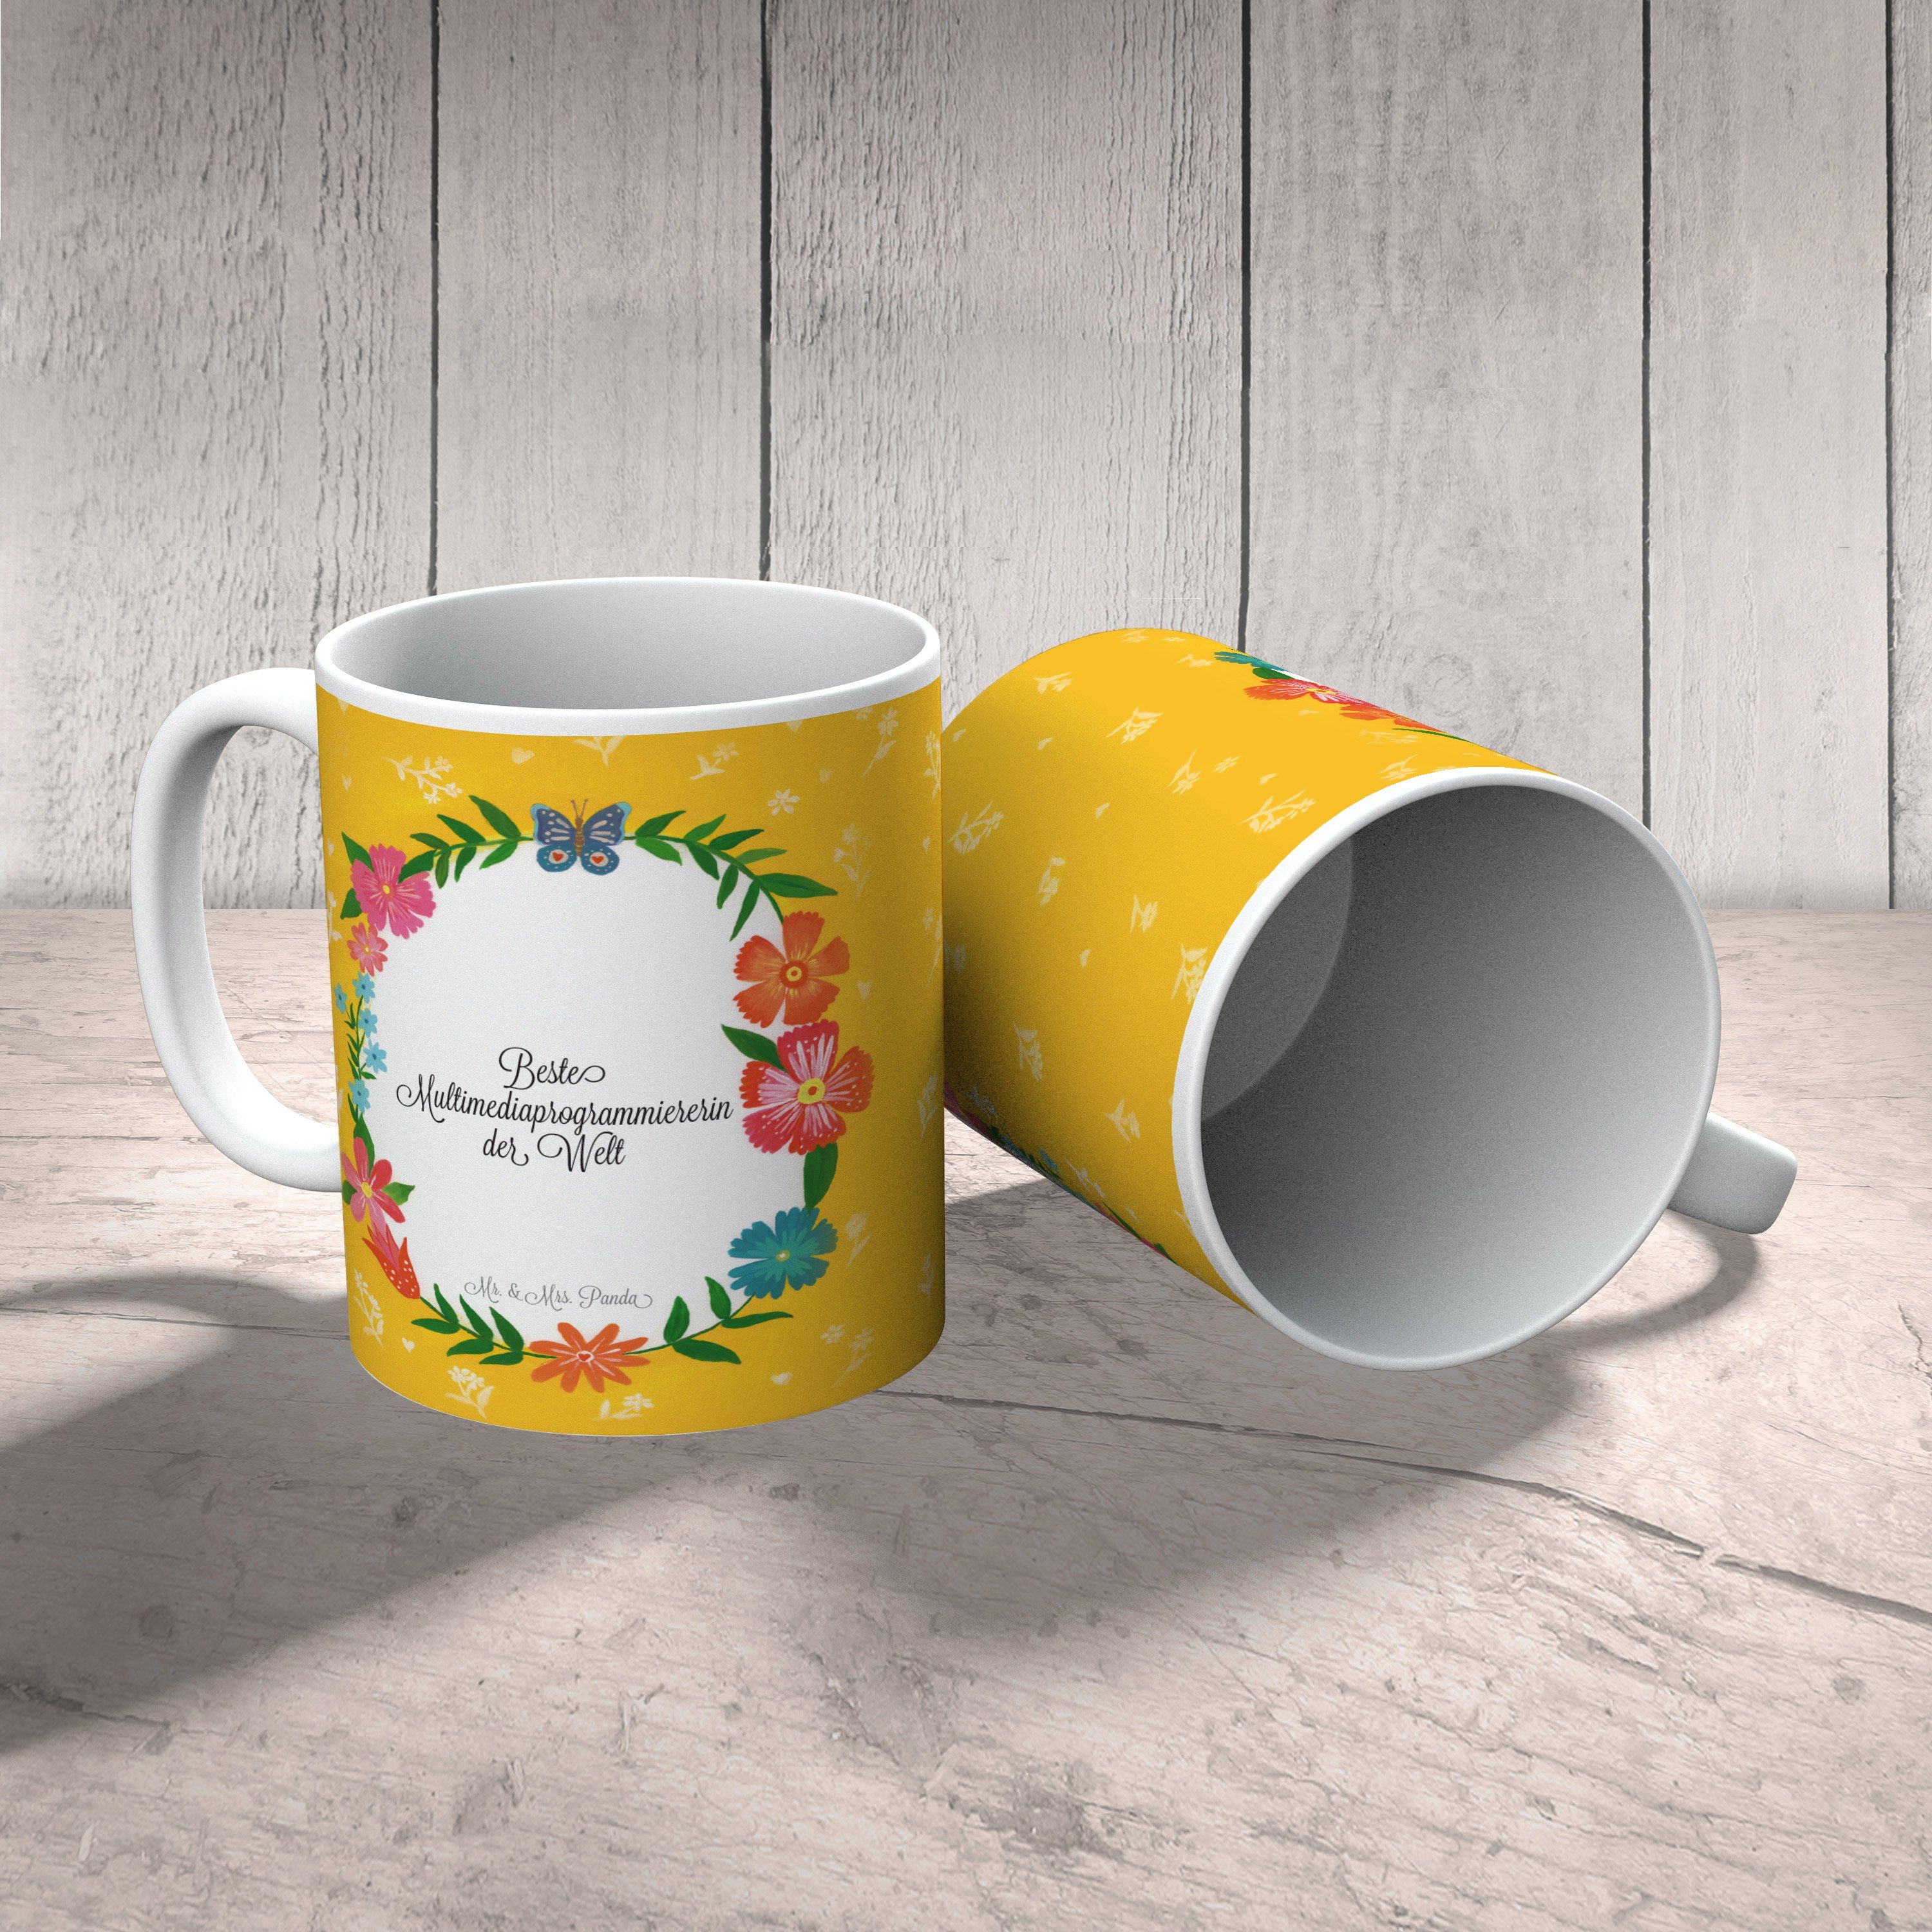 Mr. & Mrs. Panda Tasse - Keramik Abschied, Kaffe, Porzellantasse, Geschenk, Multimediaprogrammiererin